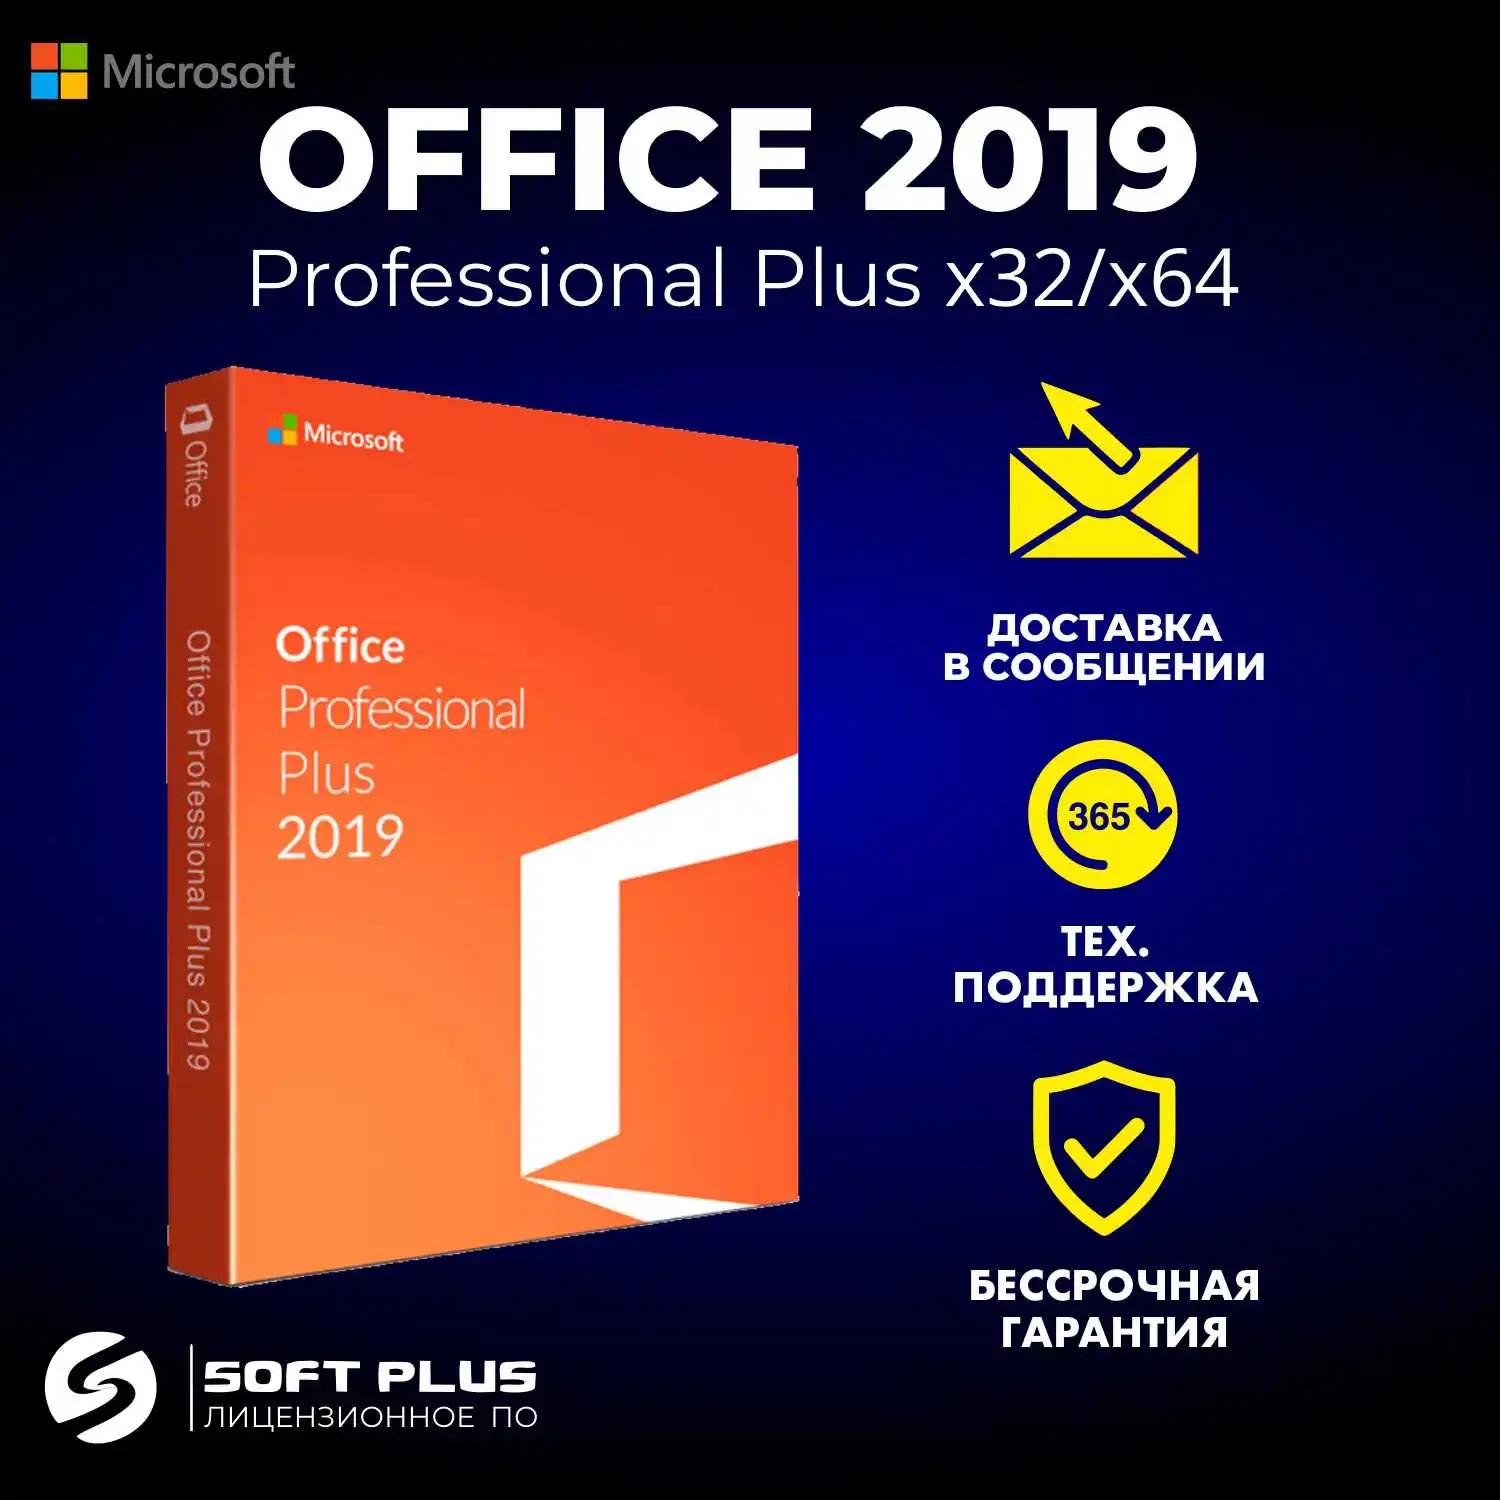 Microsoft Office 2016-2019 professional Plus активатор. Ключ активации офис 2019 профессионал плюс лицензионный ключ.